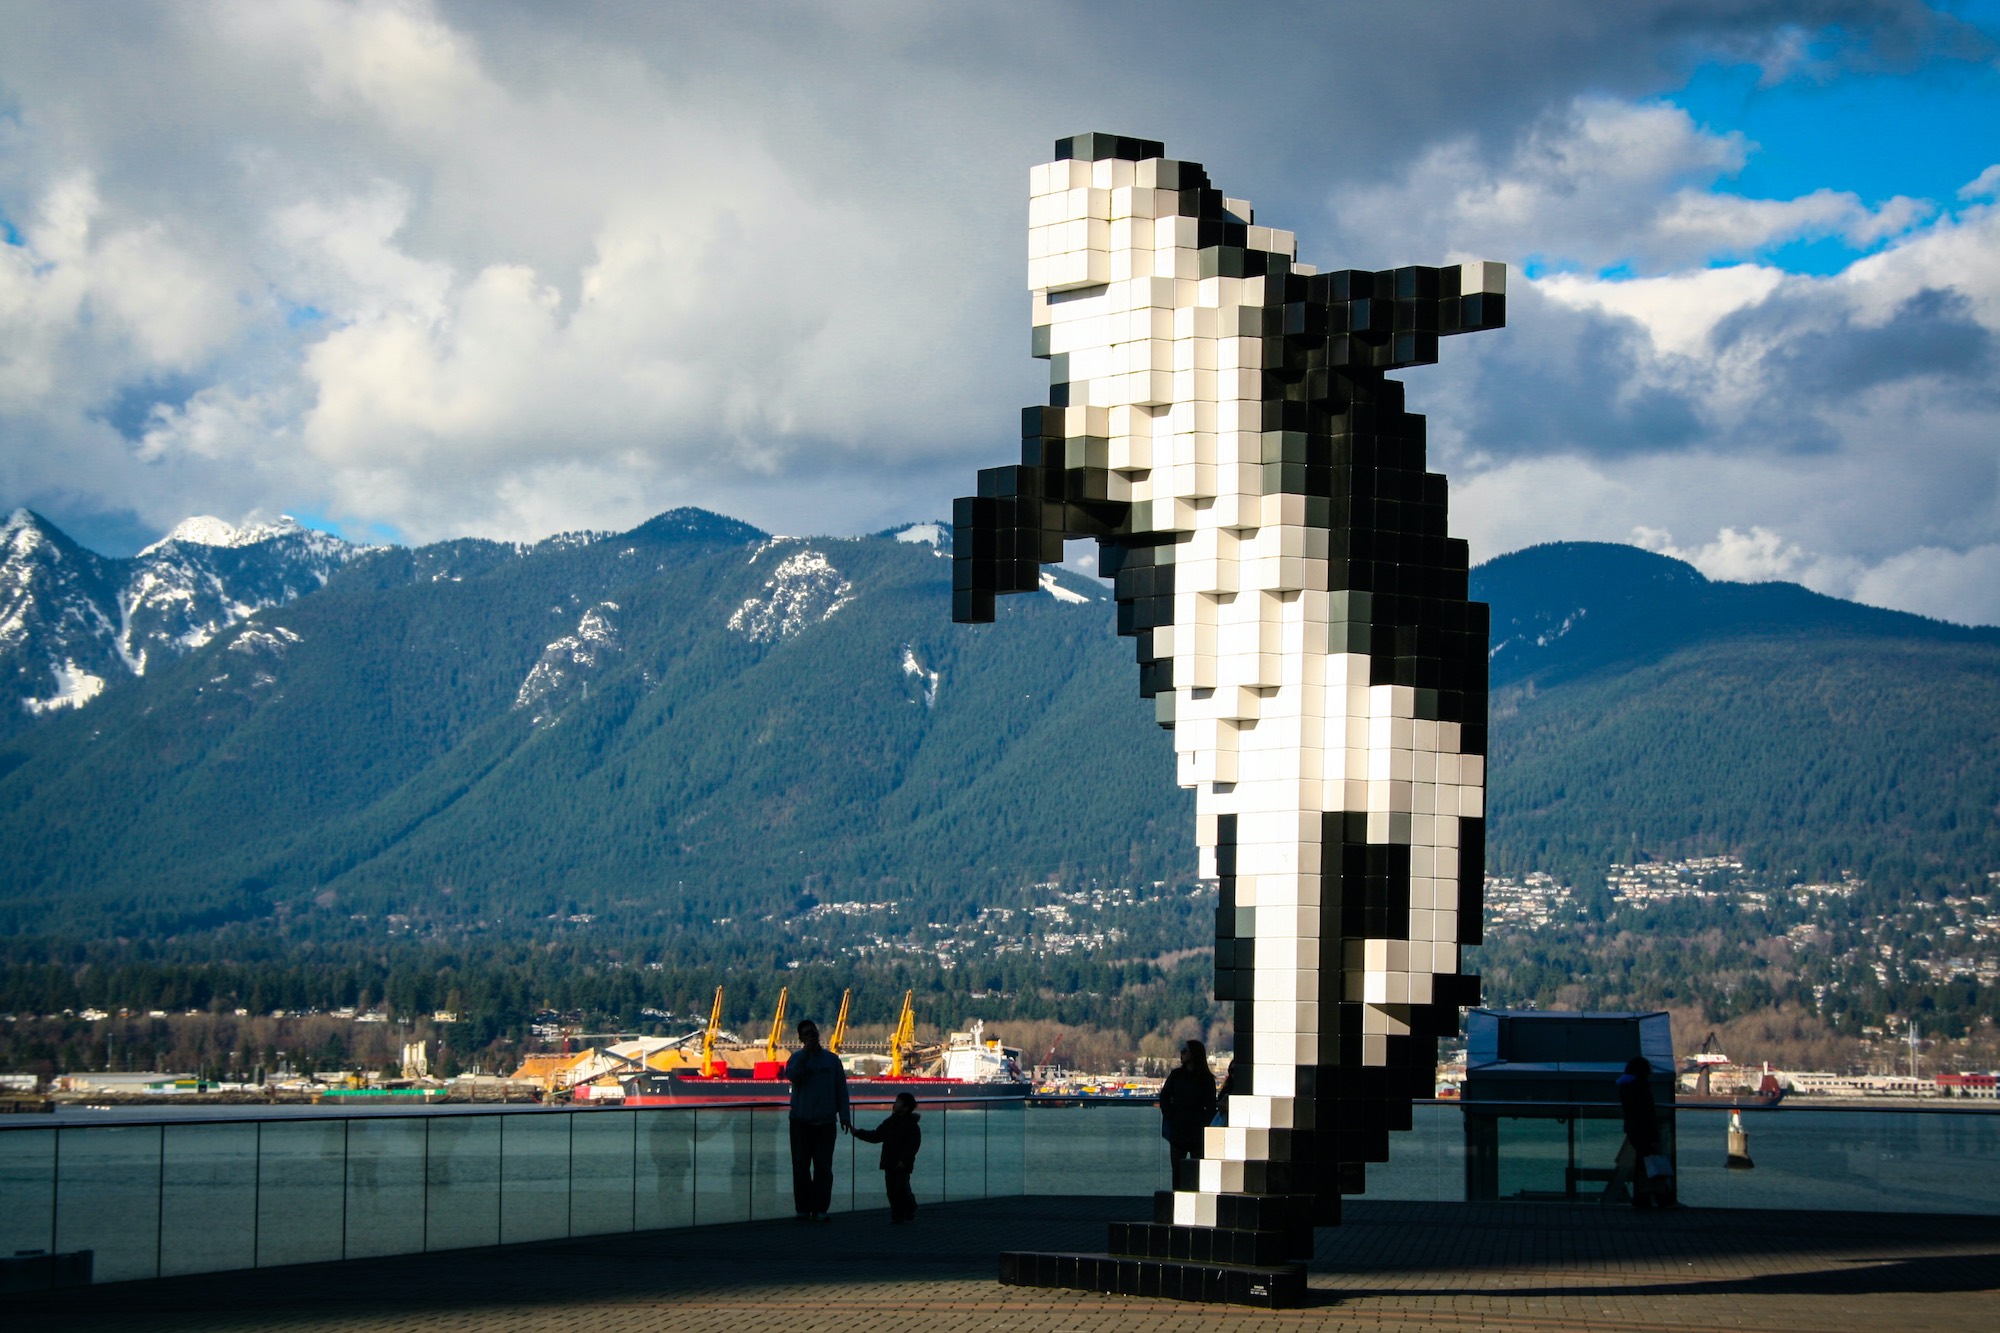 Digital Orca Vancouver